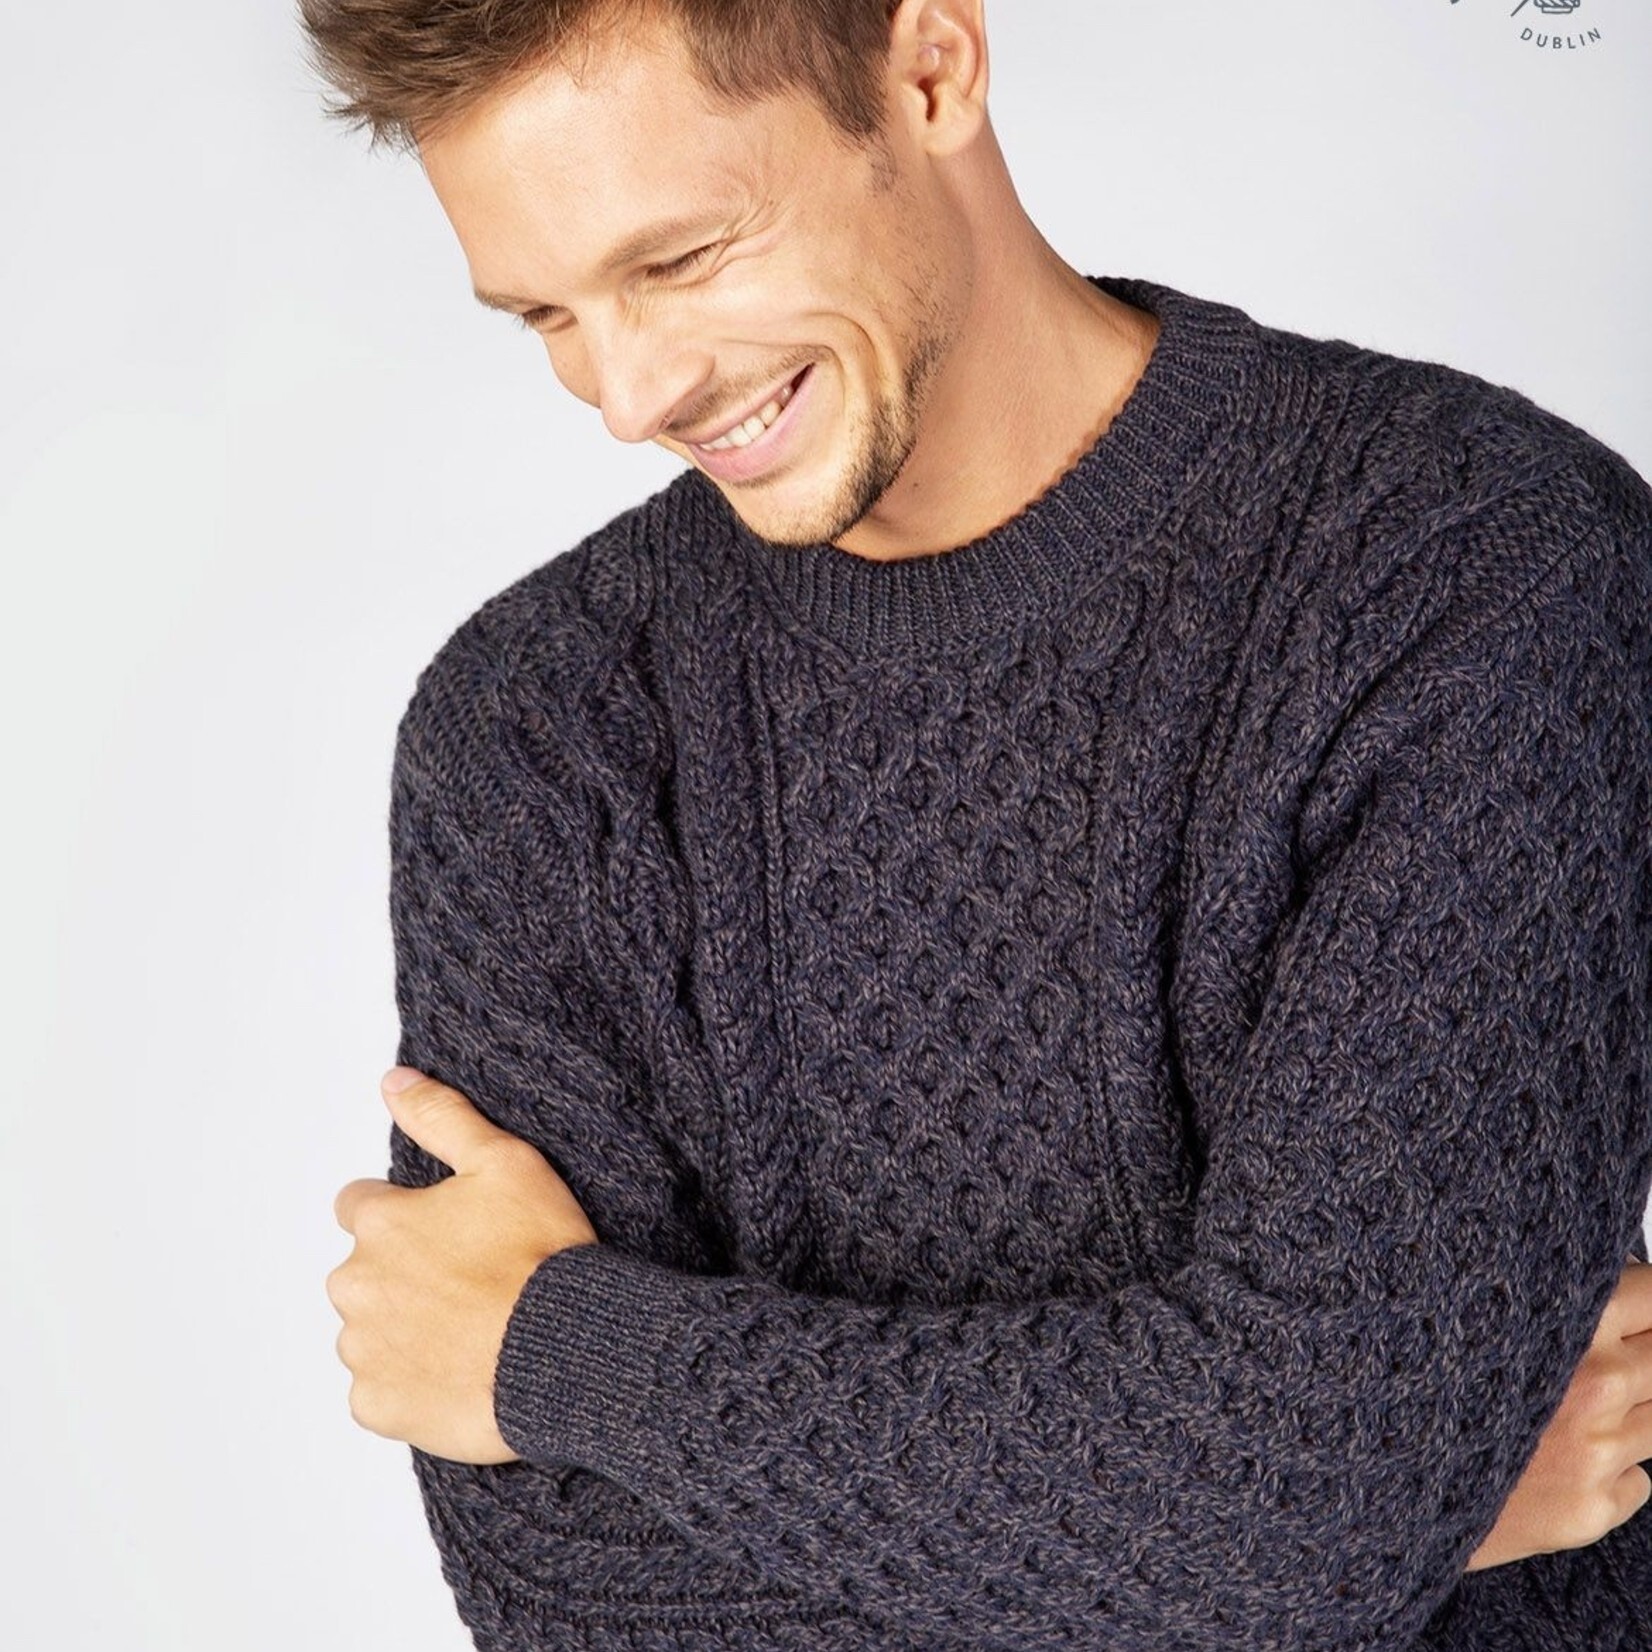 IrelandsEye Knitwear Navy Marl Wool Sweater w/ Honeycomb Stitch :